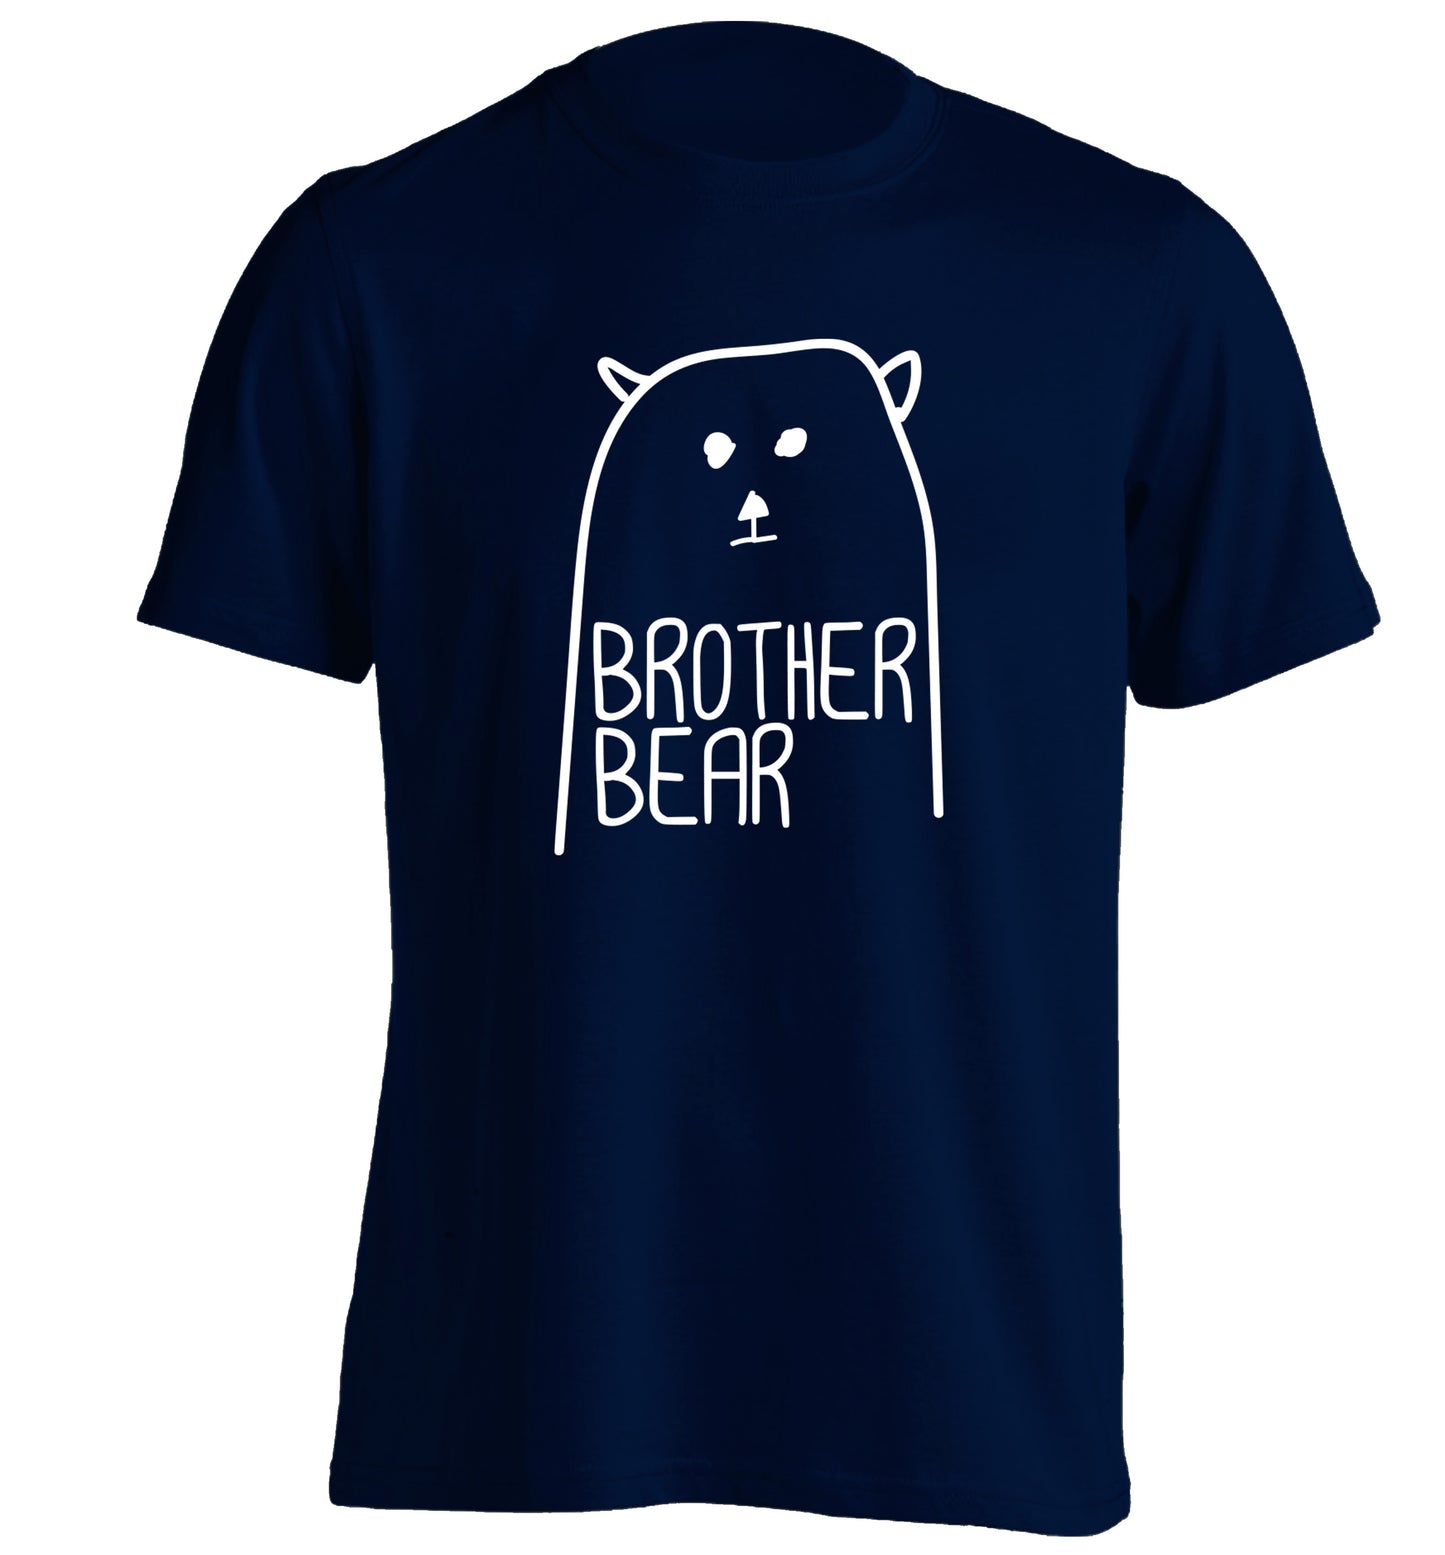 Brother bear adults unisex navy Tshirt 2XL